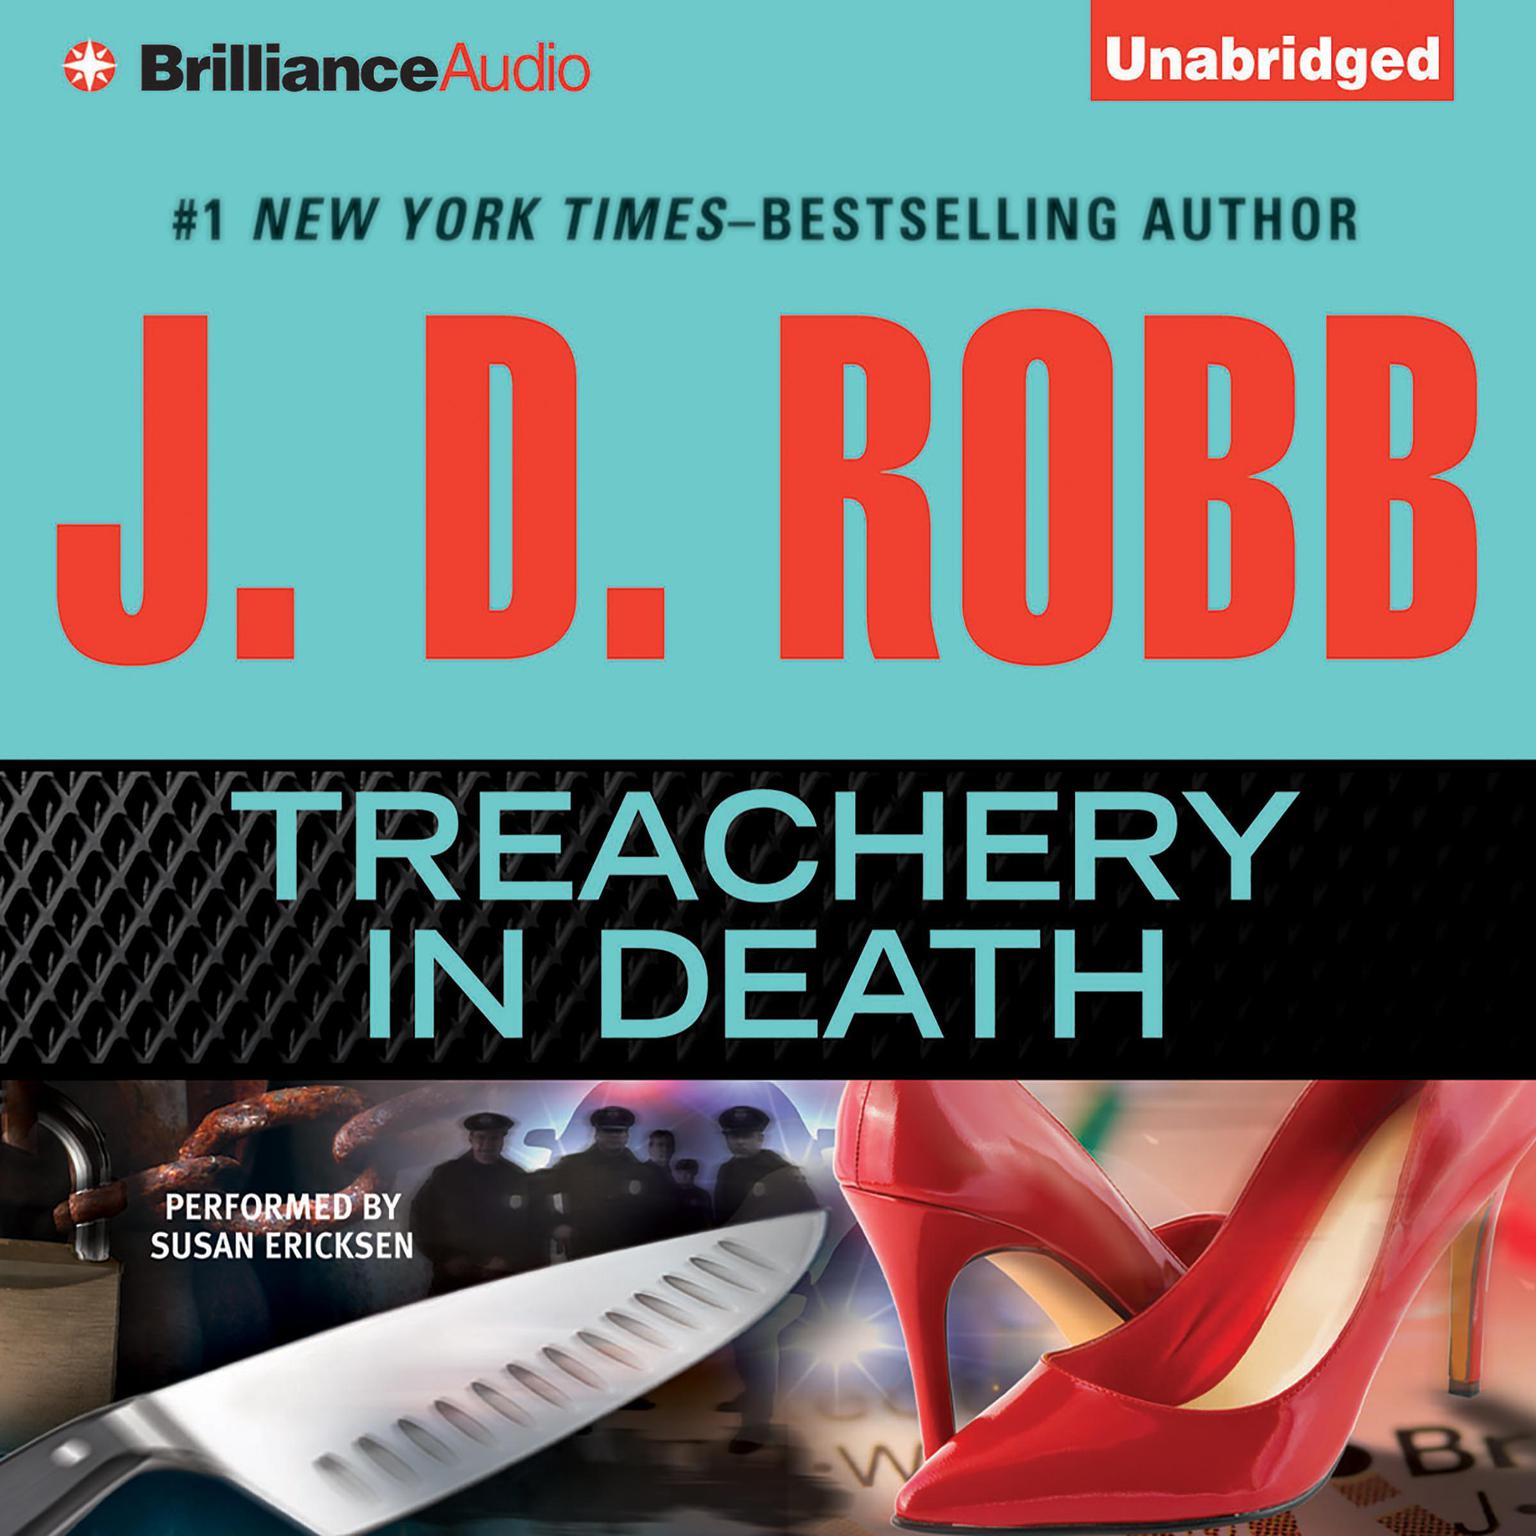 Treachery in Death Audiobook, by J. D. Robb